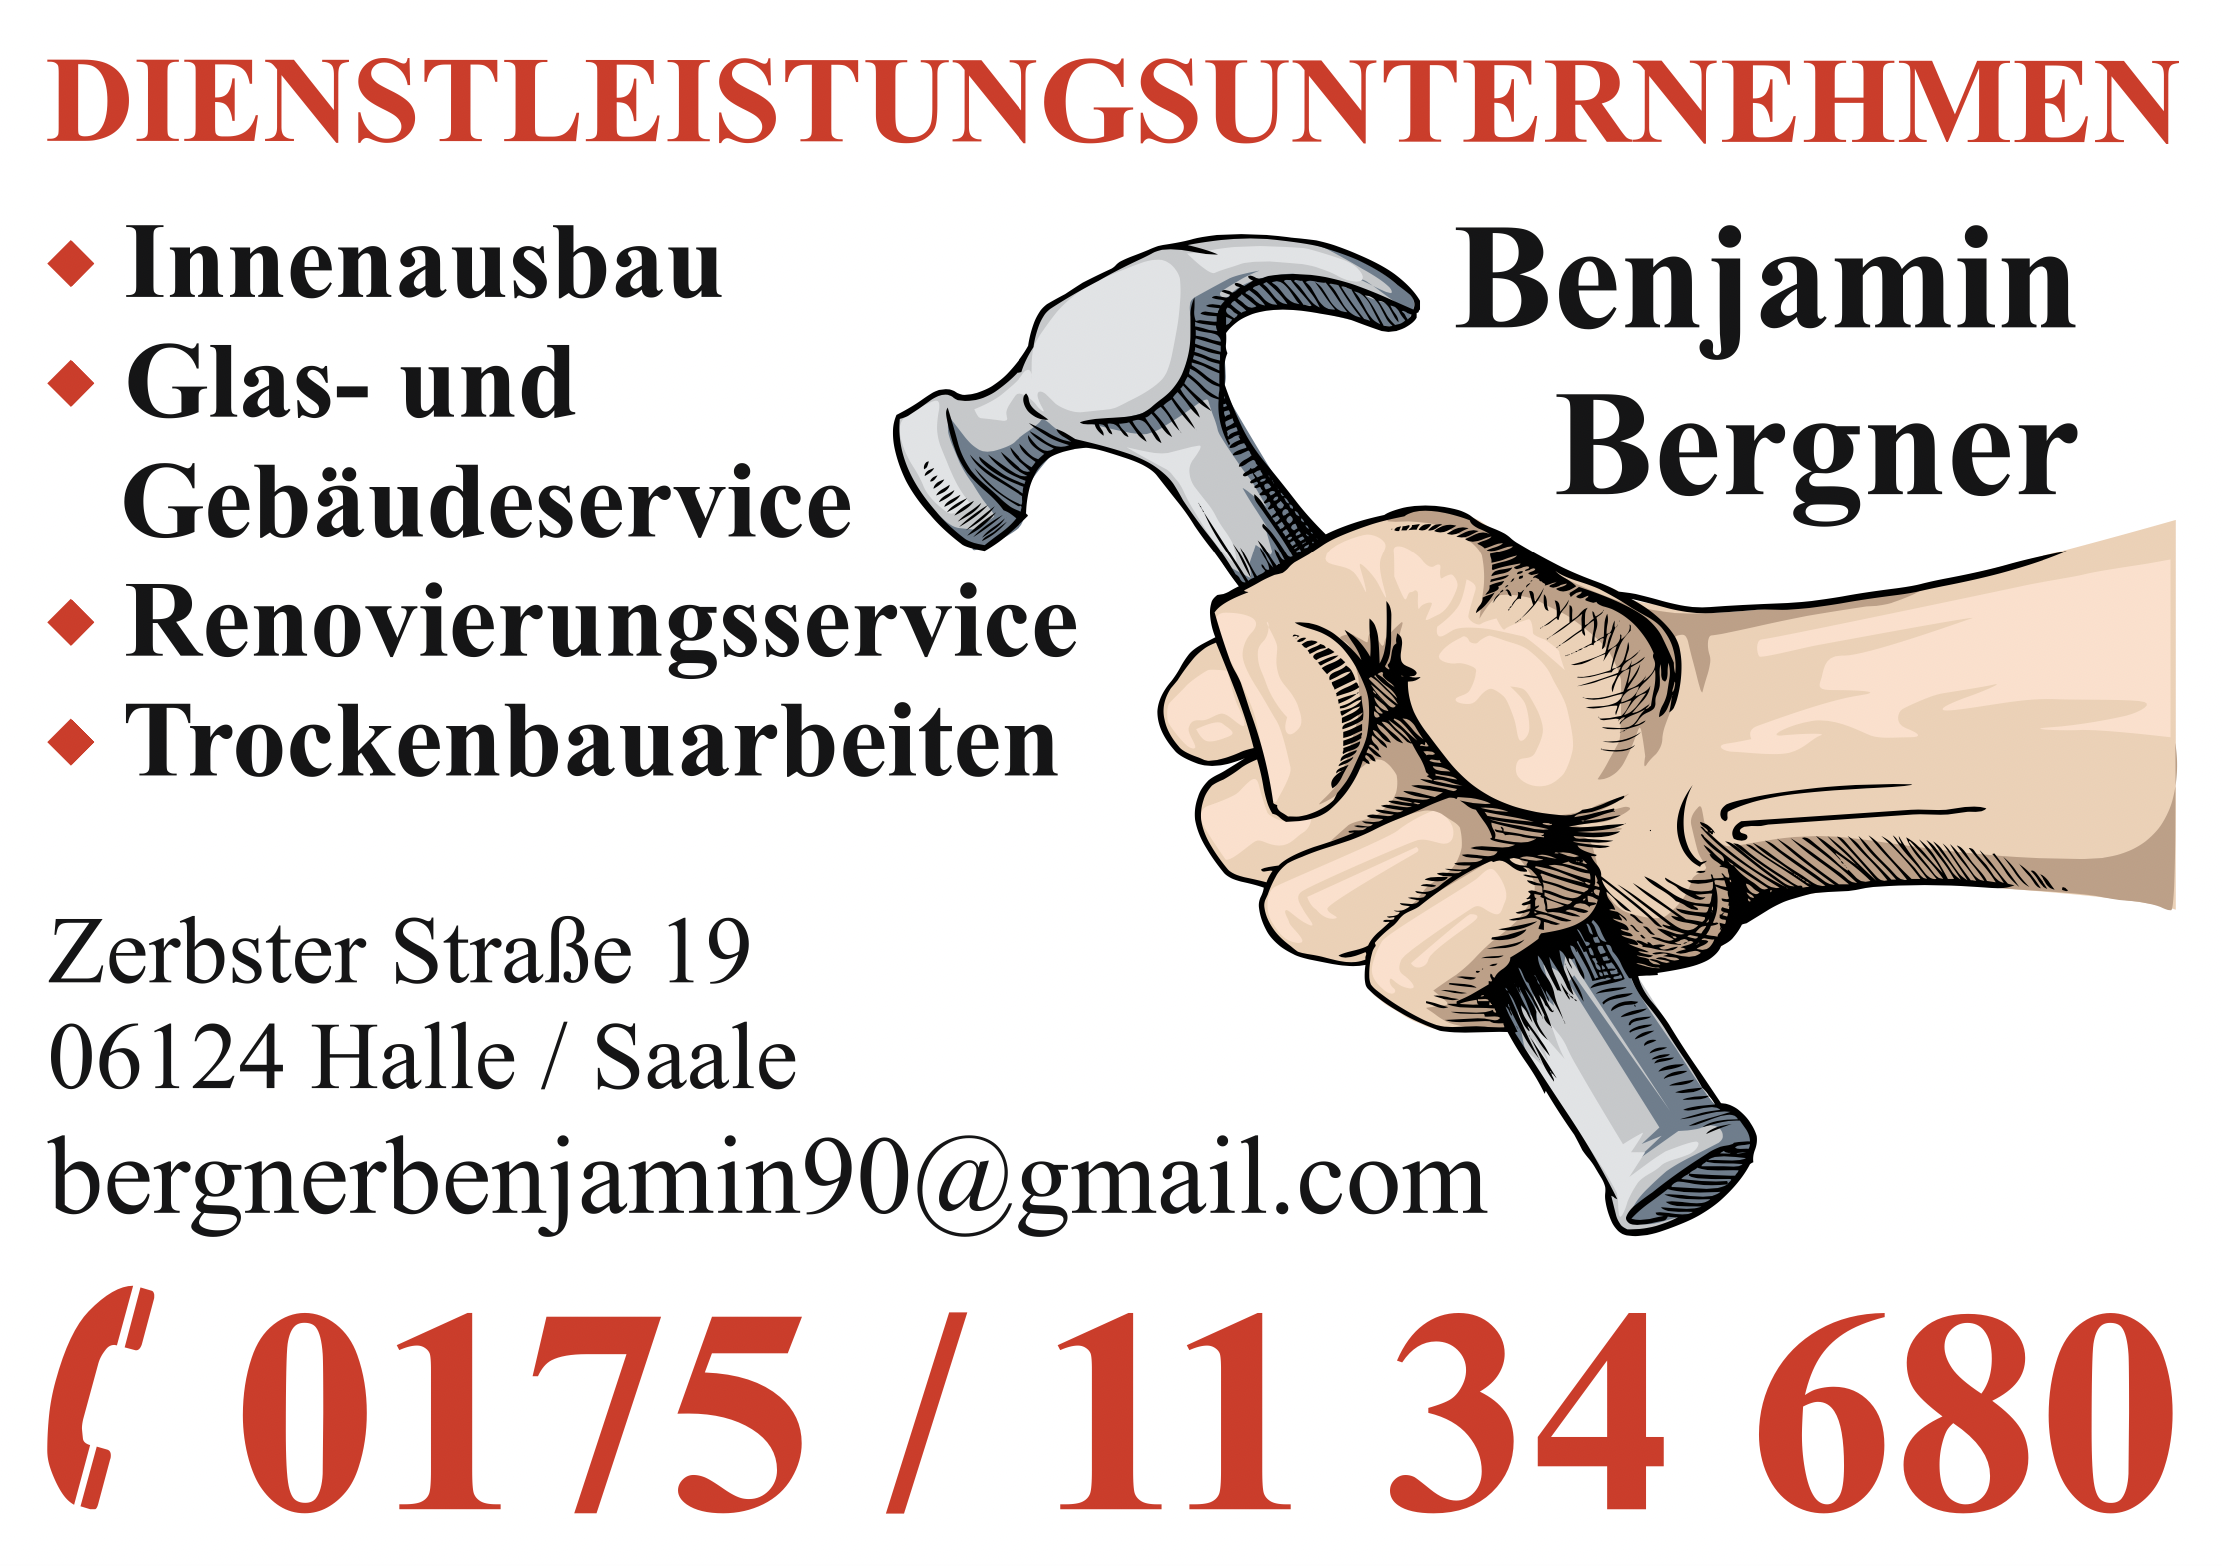 benjamin-bergner - Saalebulls Sponsor